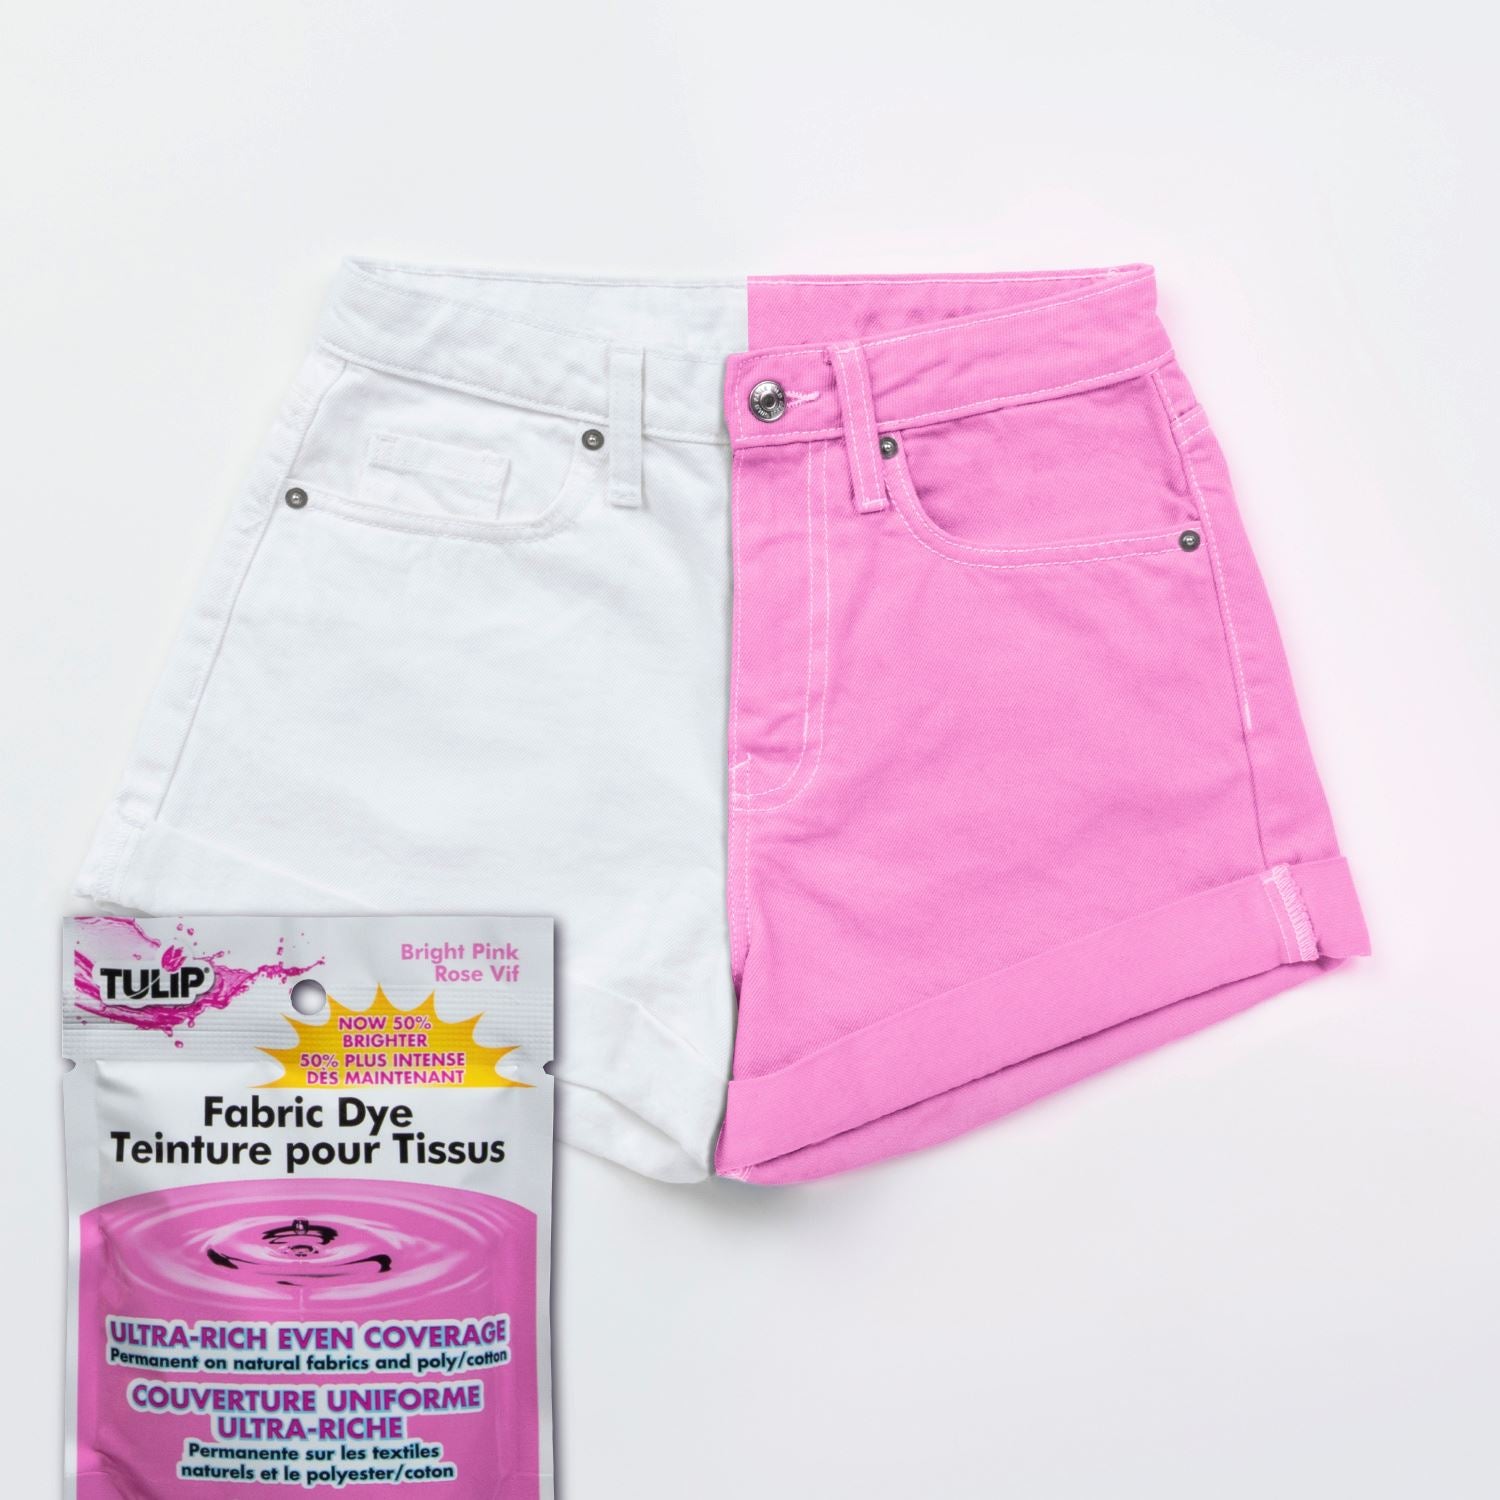 Tulip Permanent Fabric Dye, Bright Pink, 1 Pack, 1.76oz